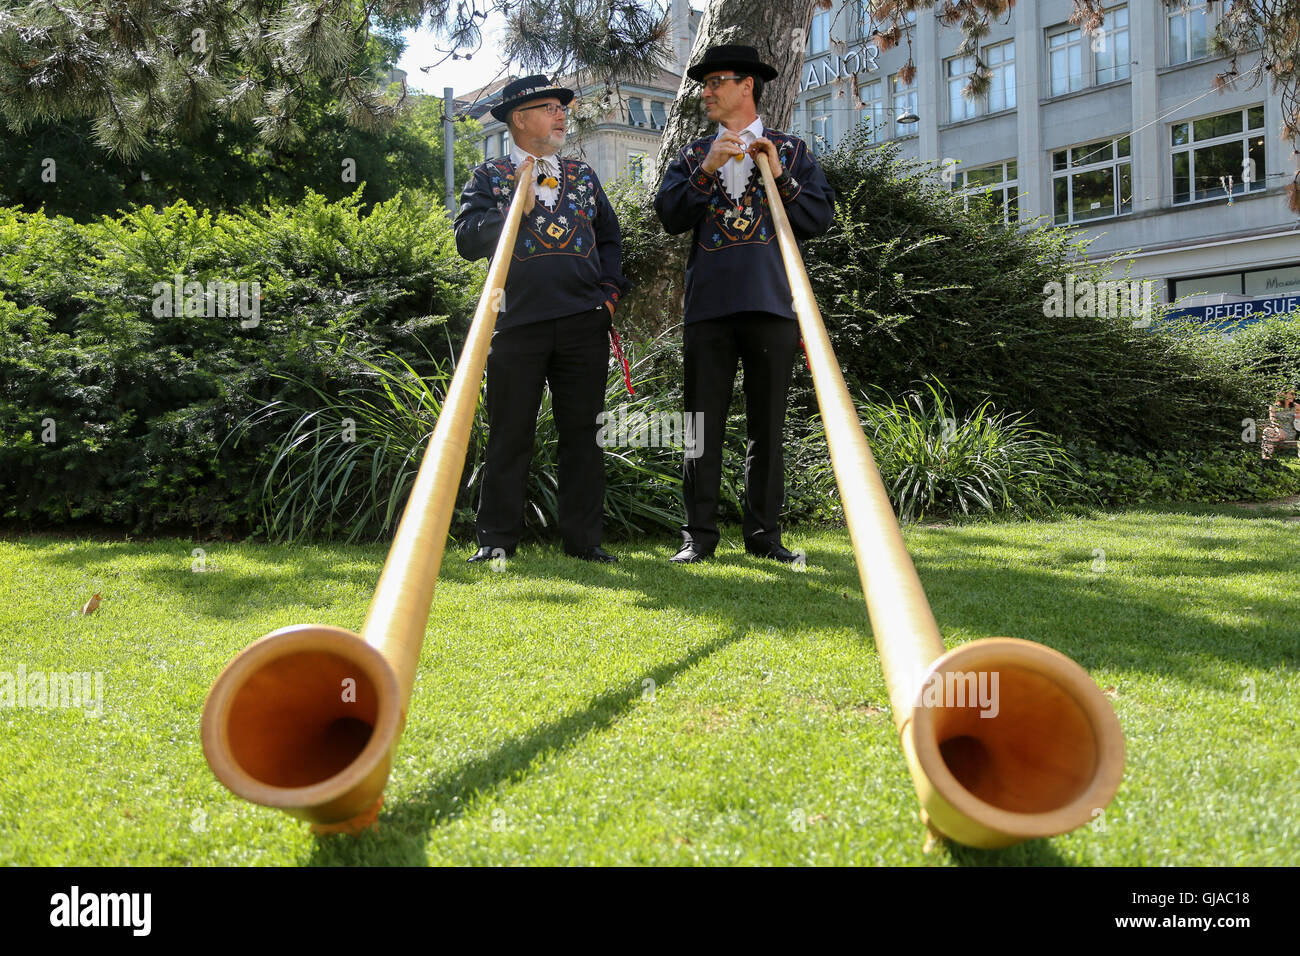 Zurich, Switzland. A pair of alphornblasers perform in Zurich city centre in preparation for Swiss National Day. Stock Photo